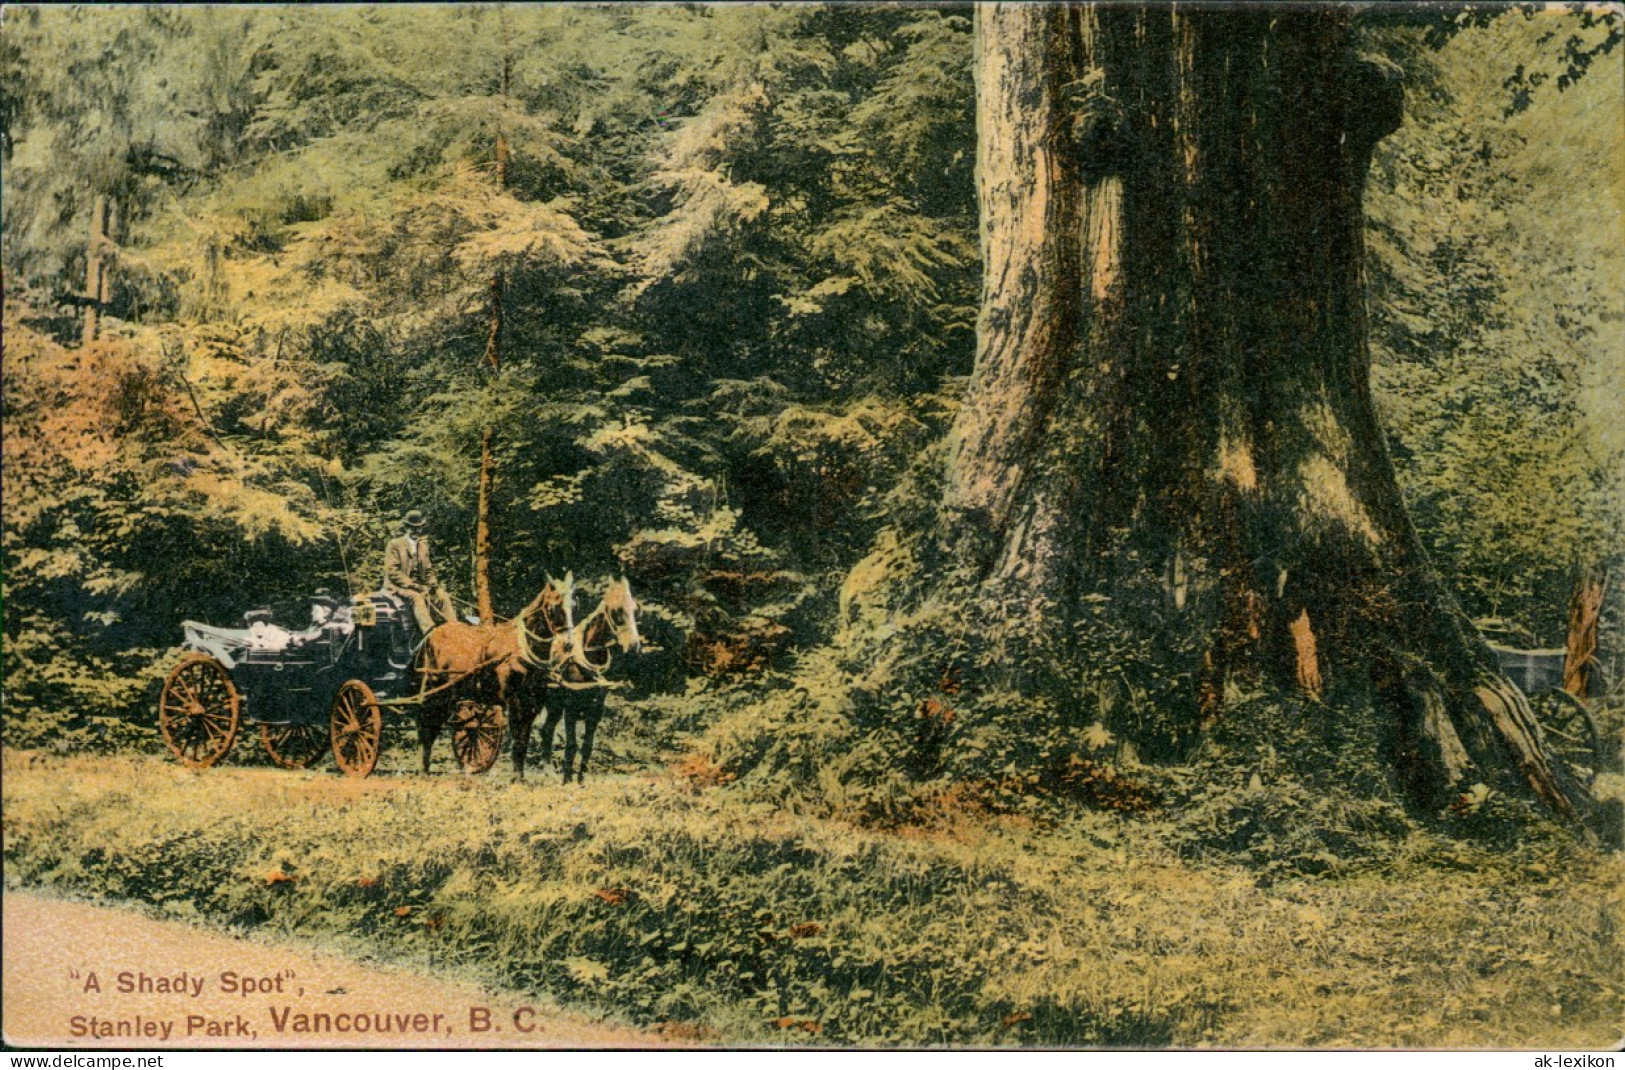 Postcard Vancouver Stanley Park, B. C. "A Shady Spot", 1911 - Vancouver